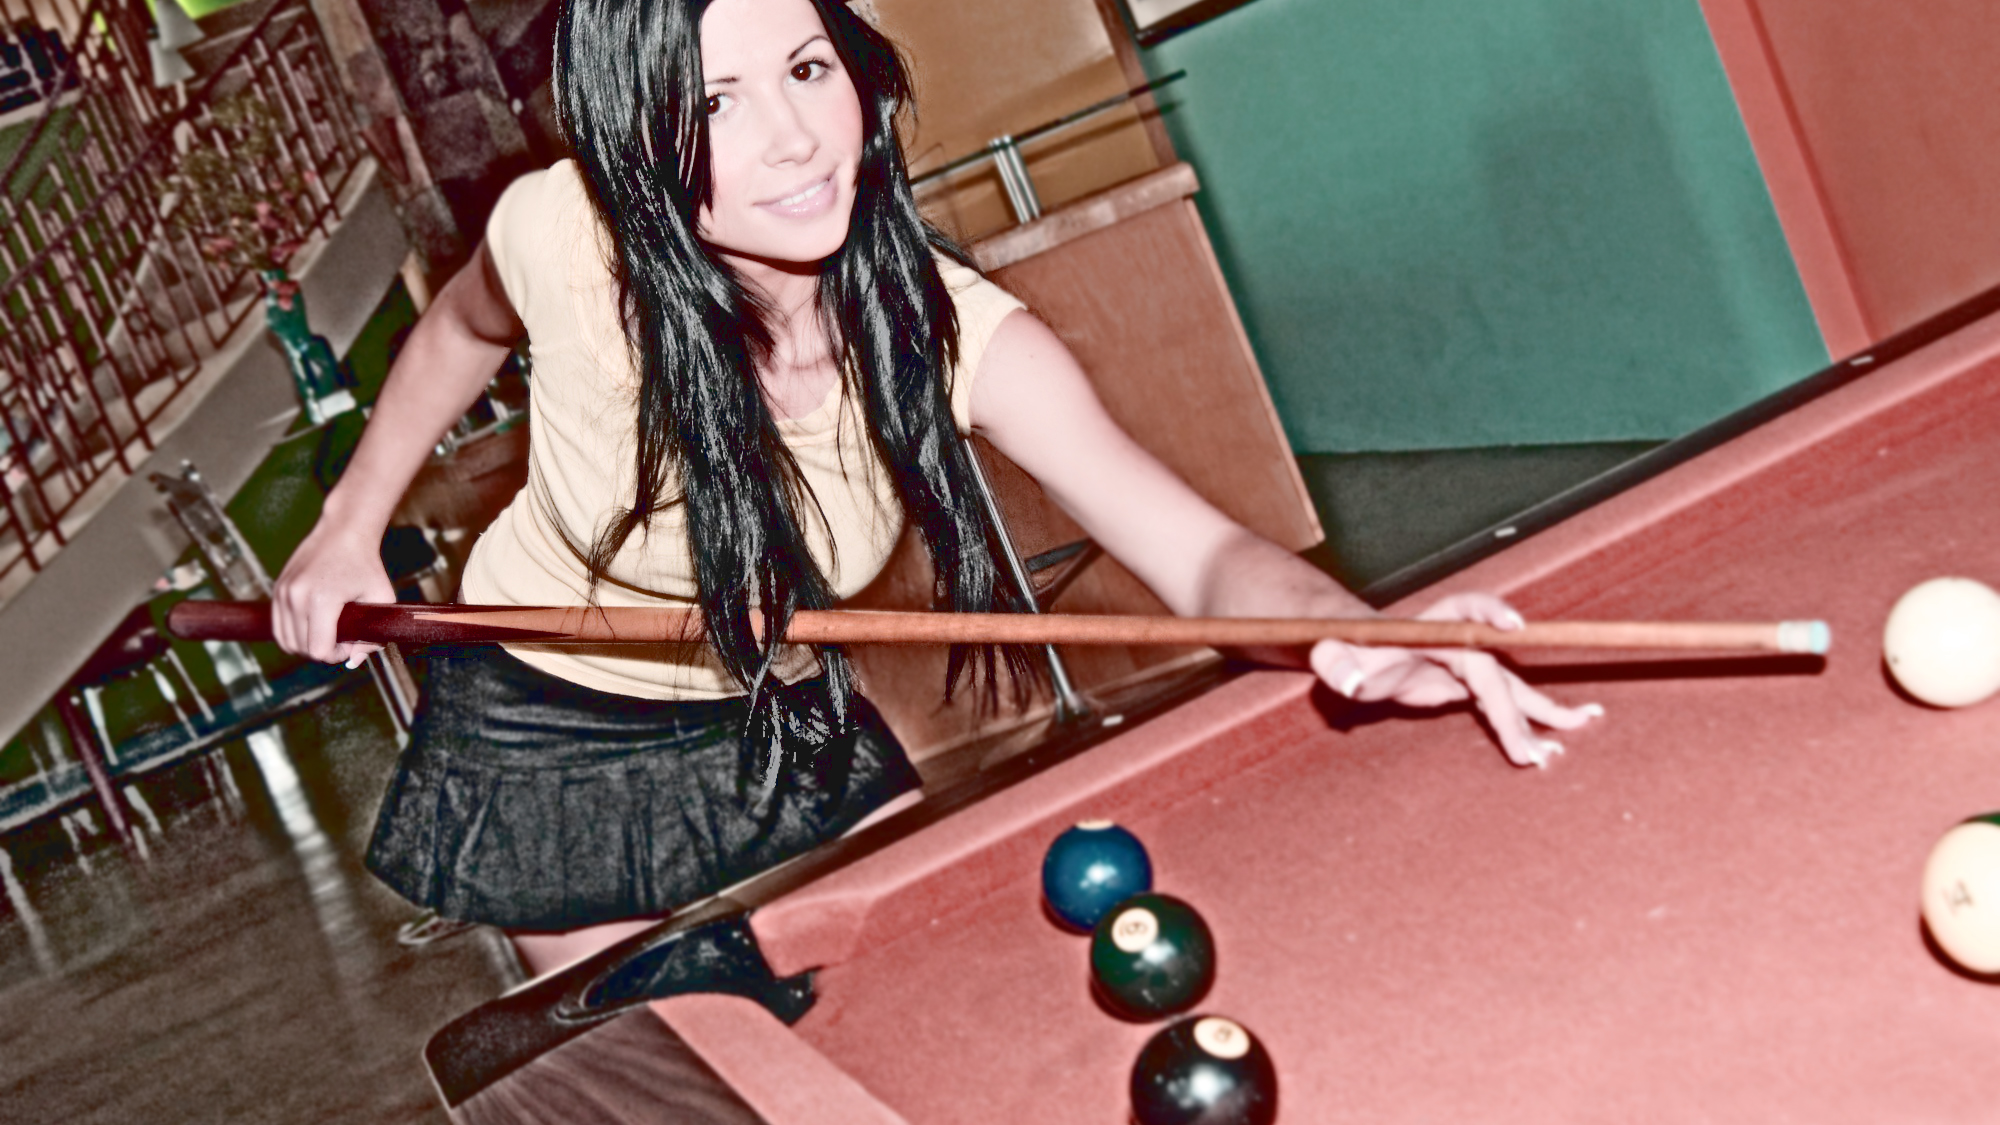 Pool Balls Pool Cue Black Shirt Black Hair Looking At Viewer 2000x1125